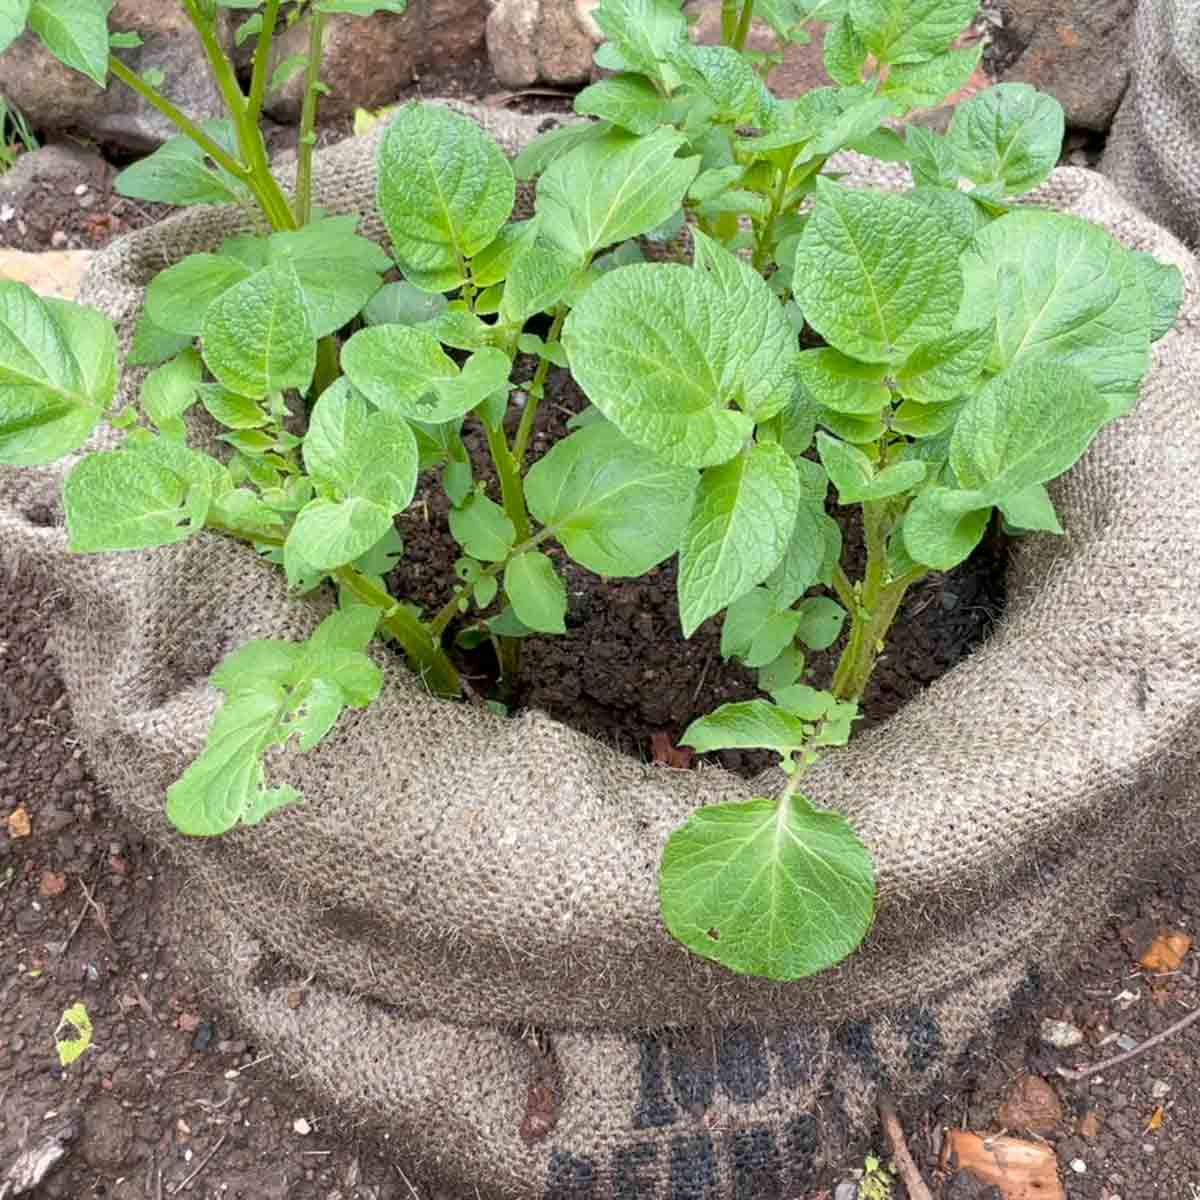 Grow Potatoes in Bags